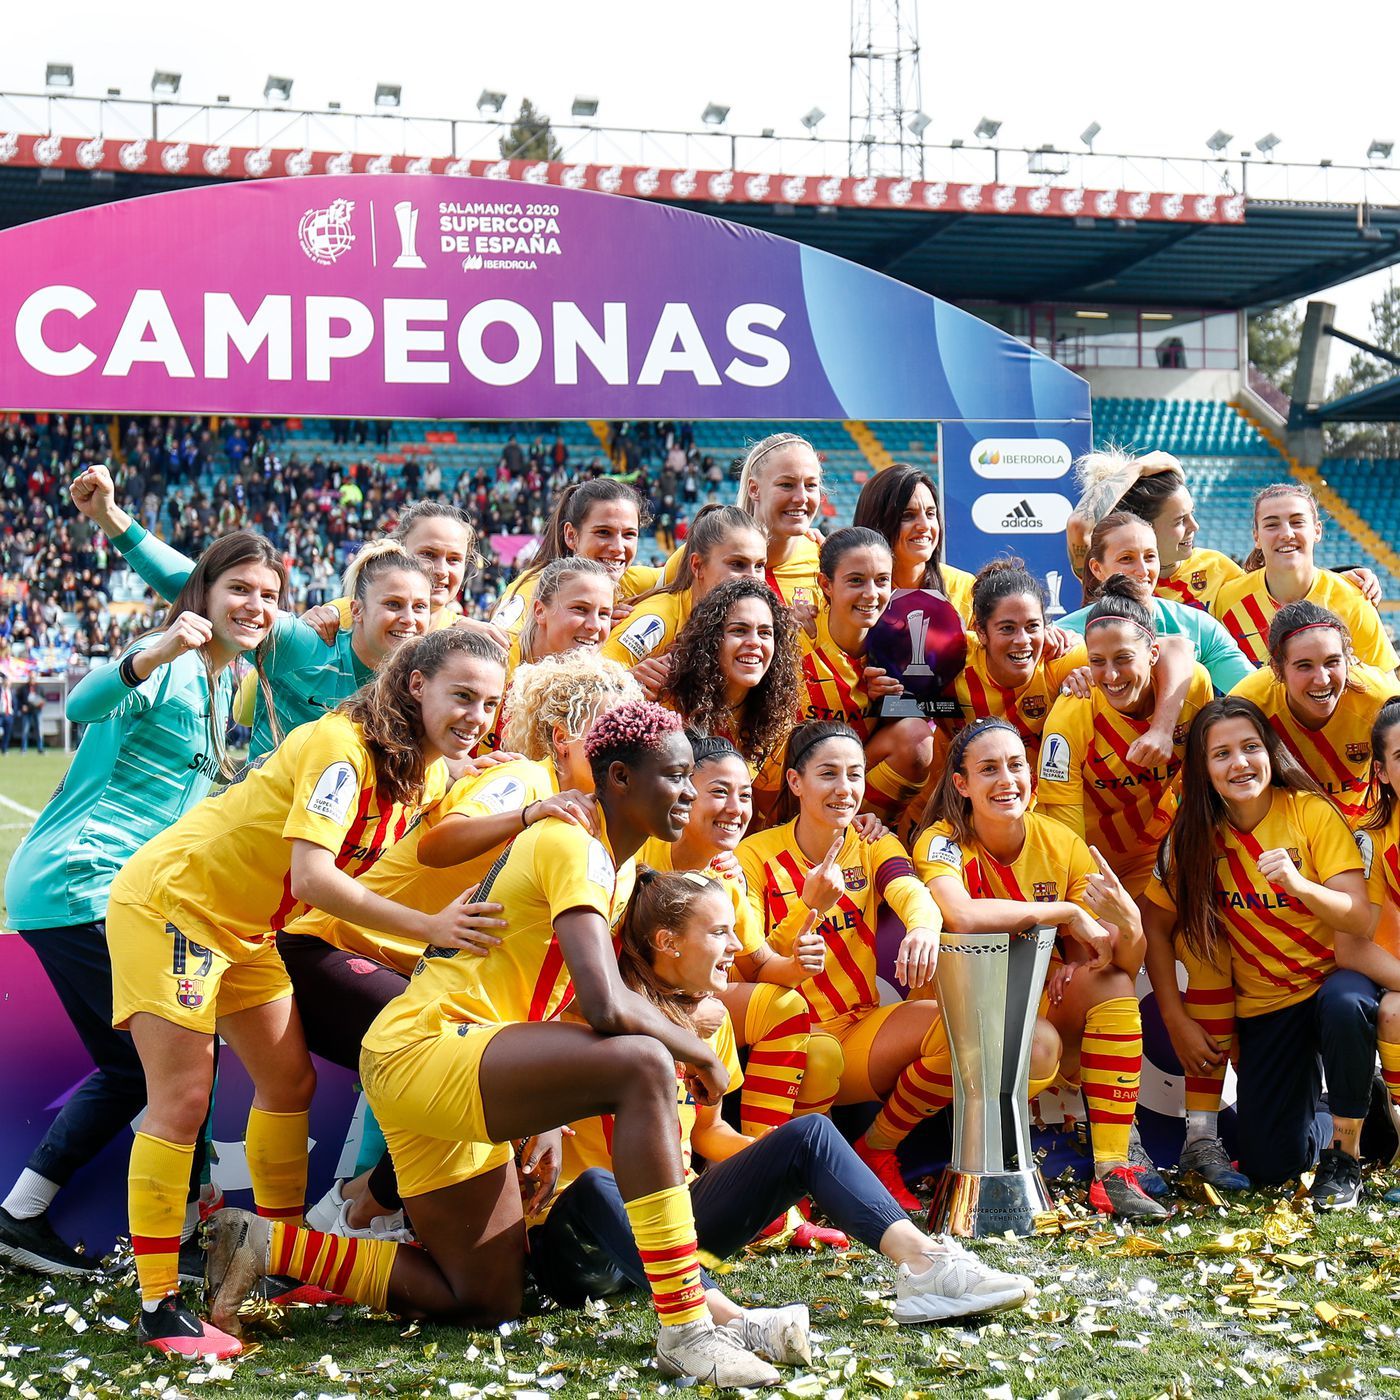 Barcelona Femeni Beat Real Sociedad 10 1 To Win Spanish Super Cup